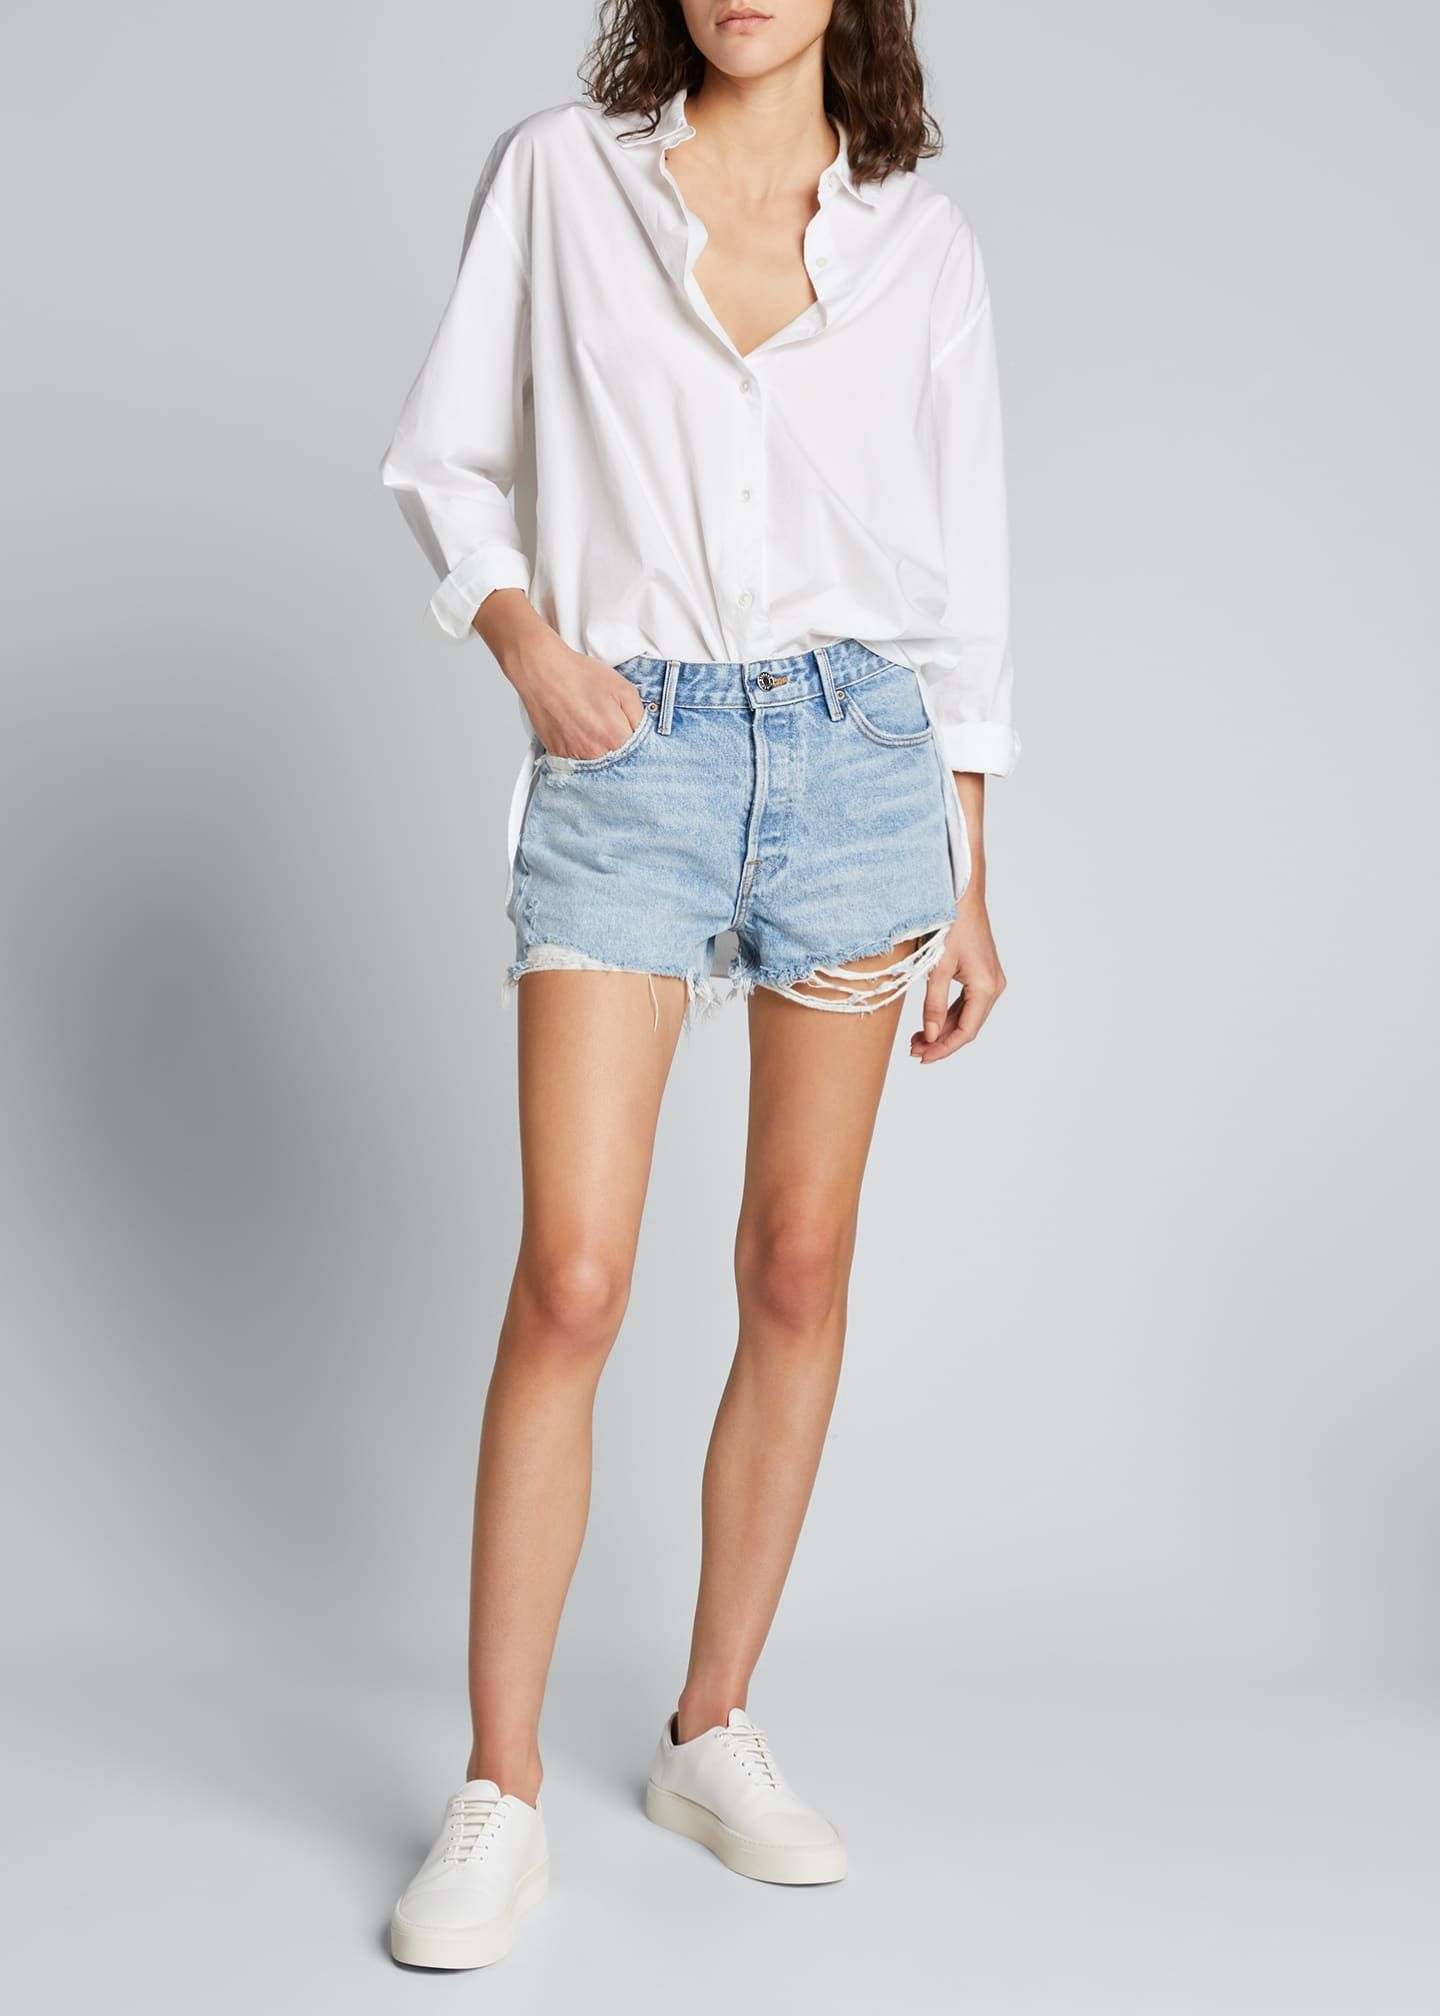 Womens Clothing Shorts Jean and denim shorts Leon & Harper Denim Shorts in White 